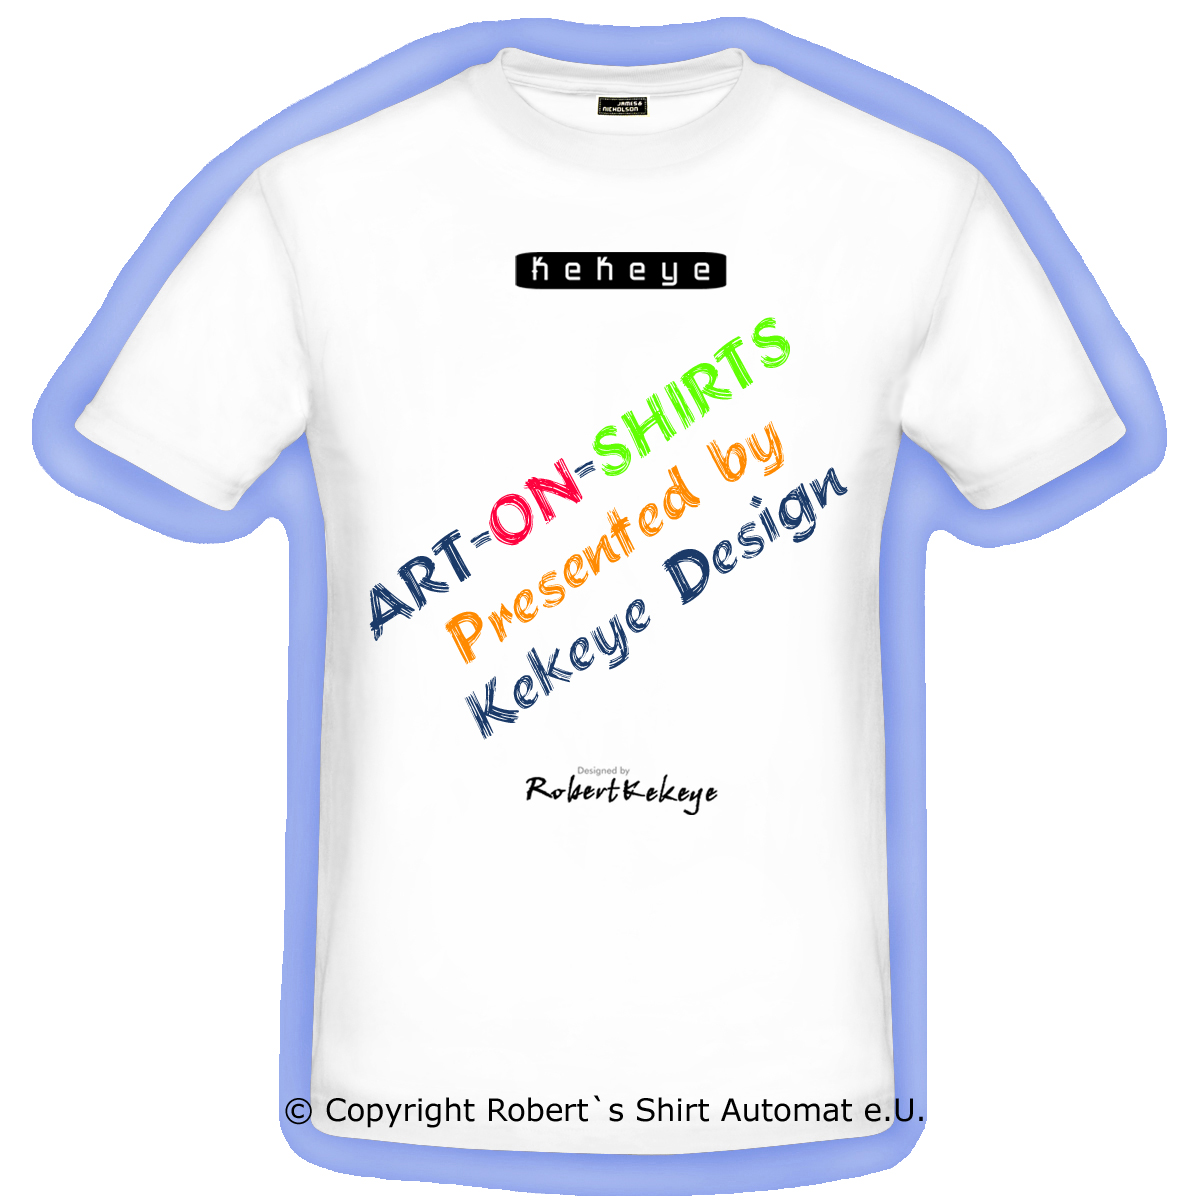 ART-ON-SHIRTS, presented by Kekeye Design.